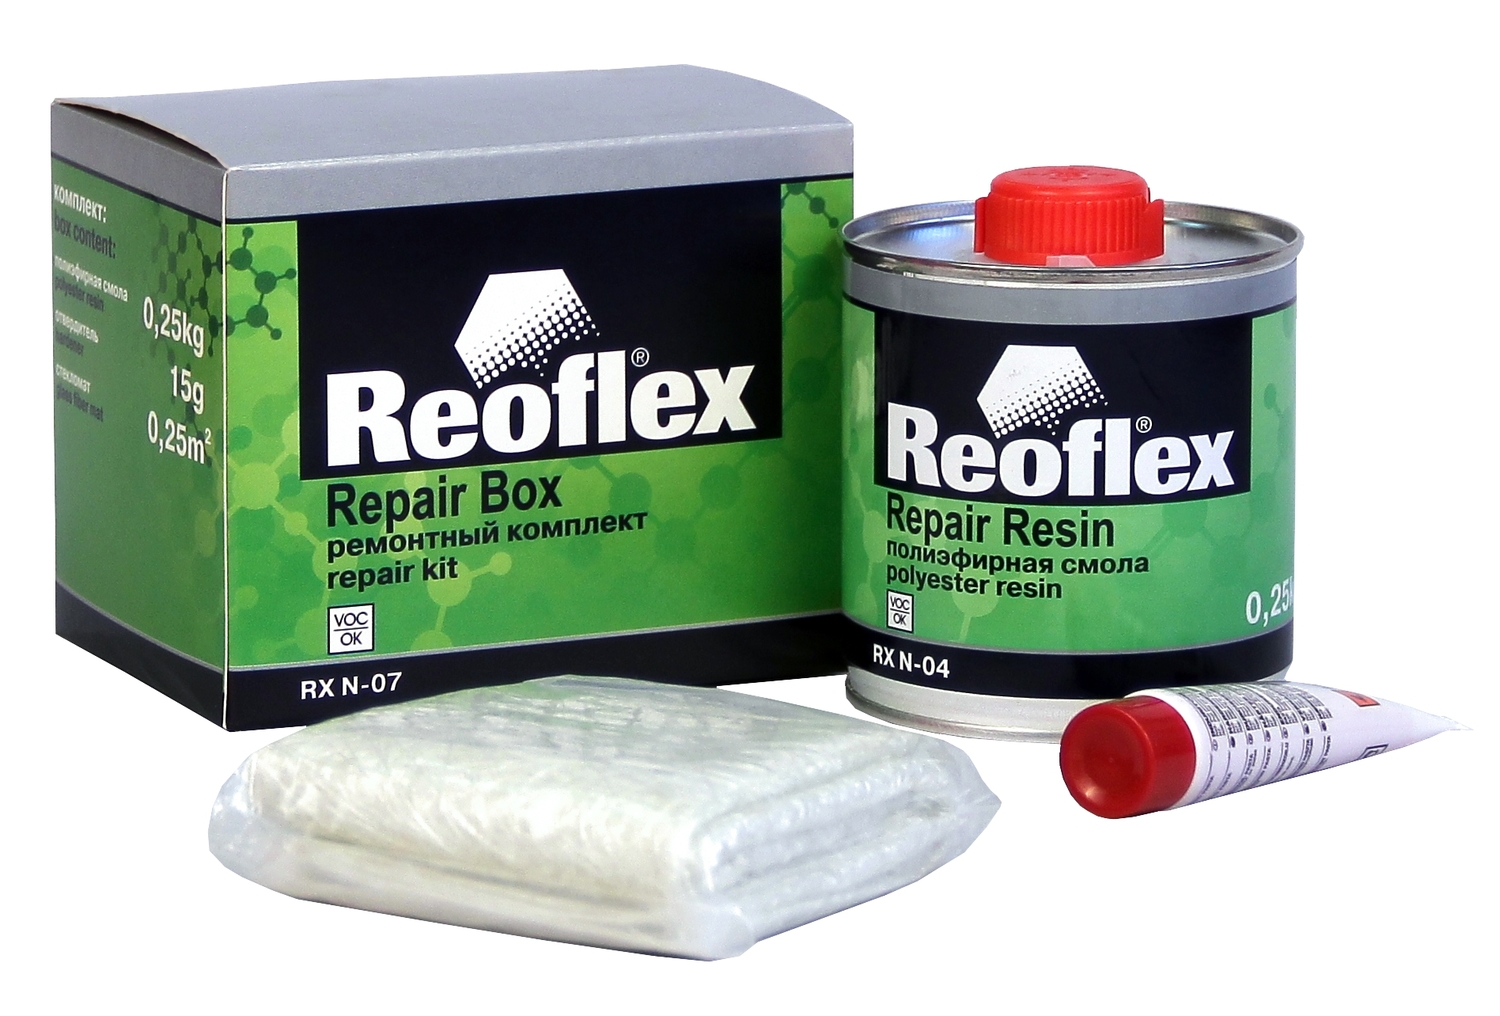 REOFLEX Ремкомплект для пластика